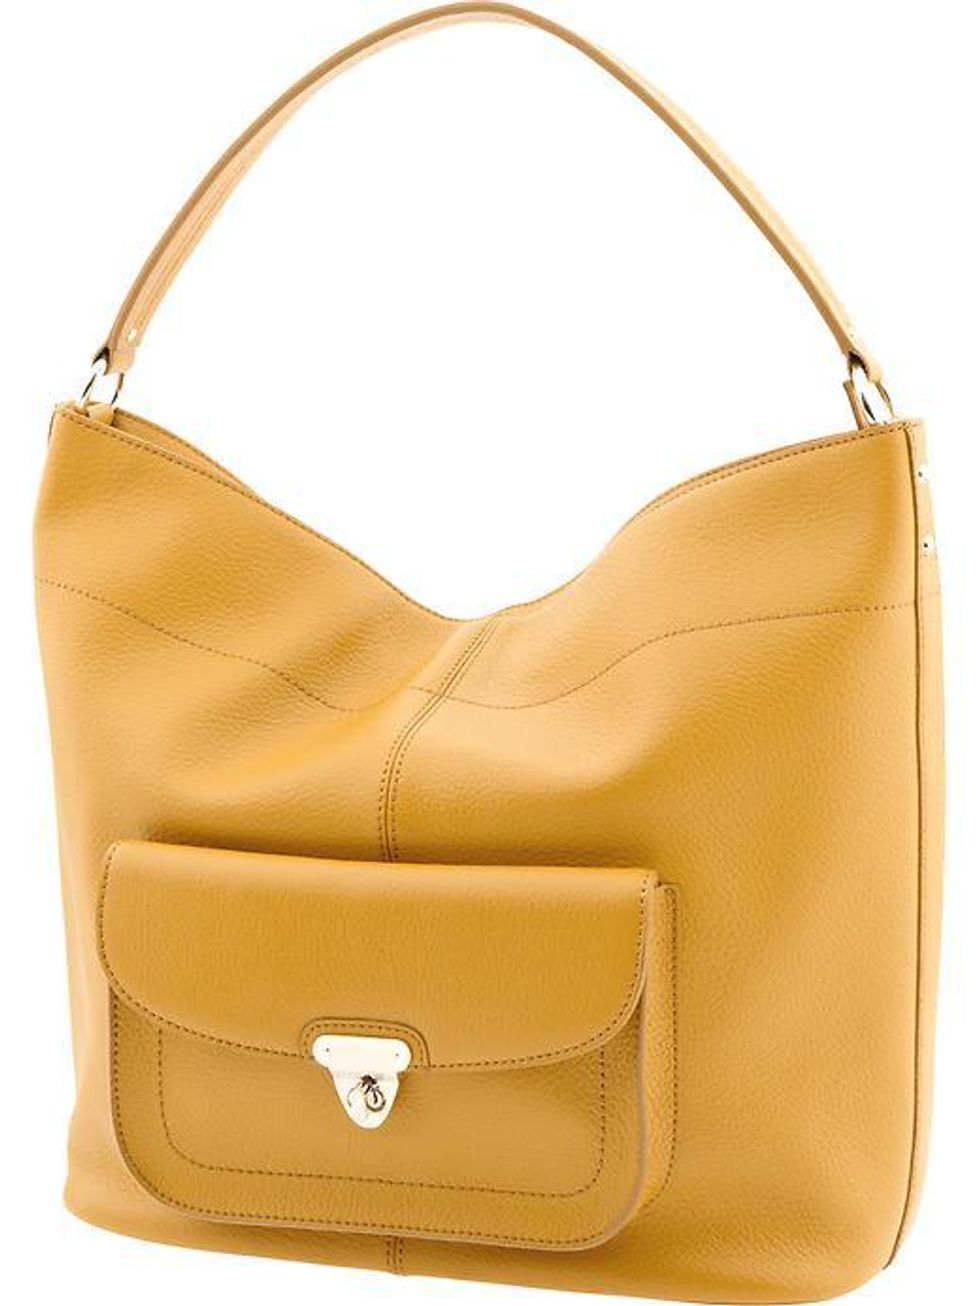 Sensational summer handbags put style right in your hands - CultureMap ...